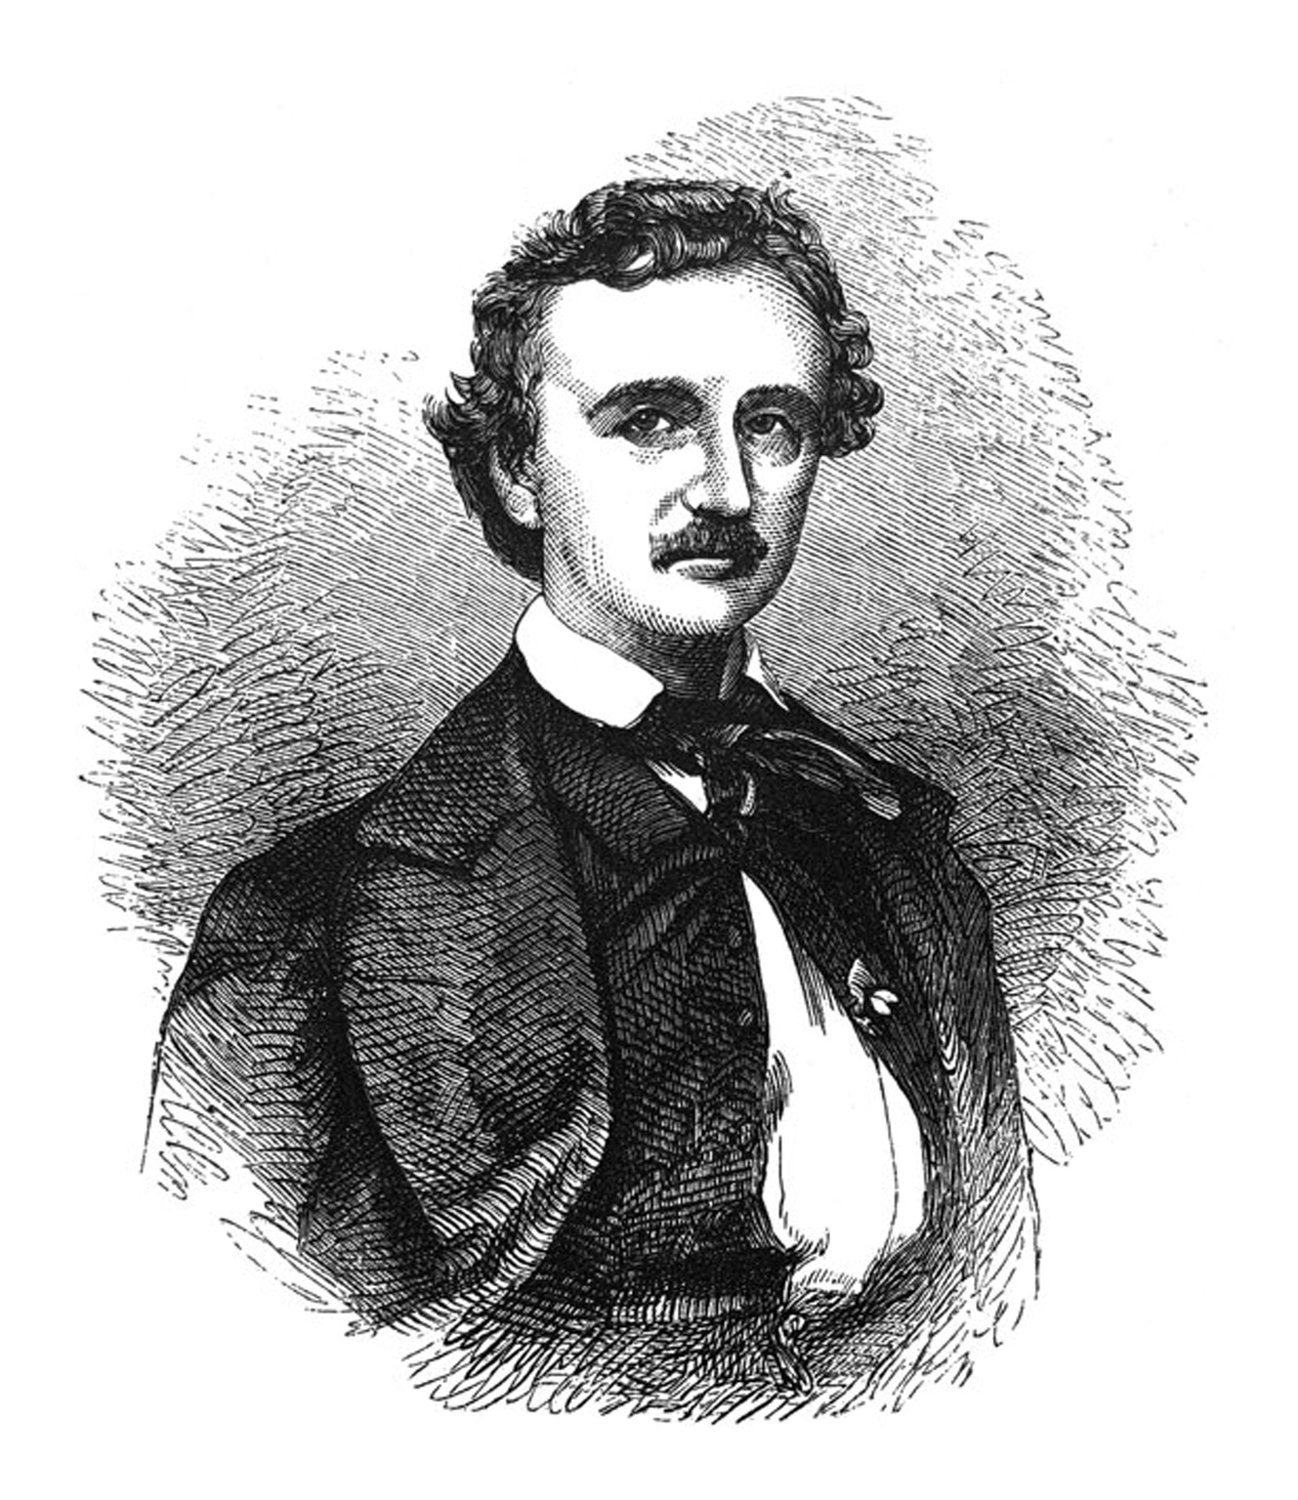 This illustration of Edgar Allan Poe was featured in Harper's magazine in 1872.